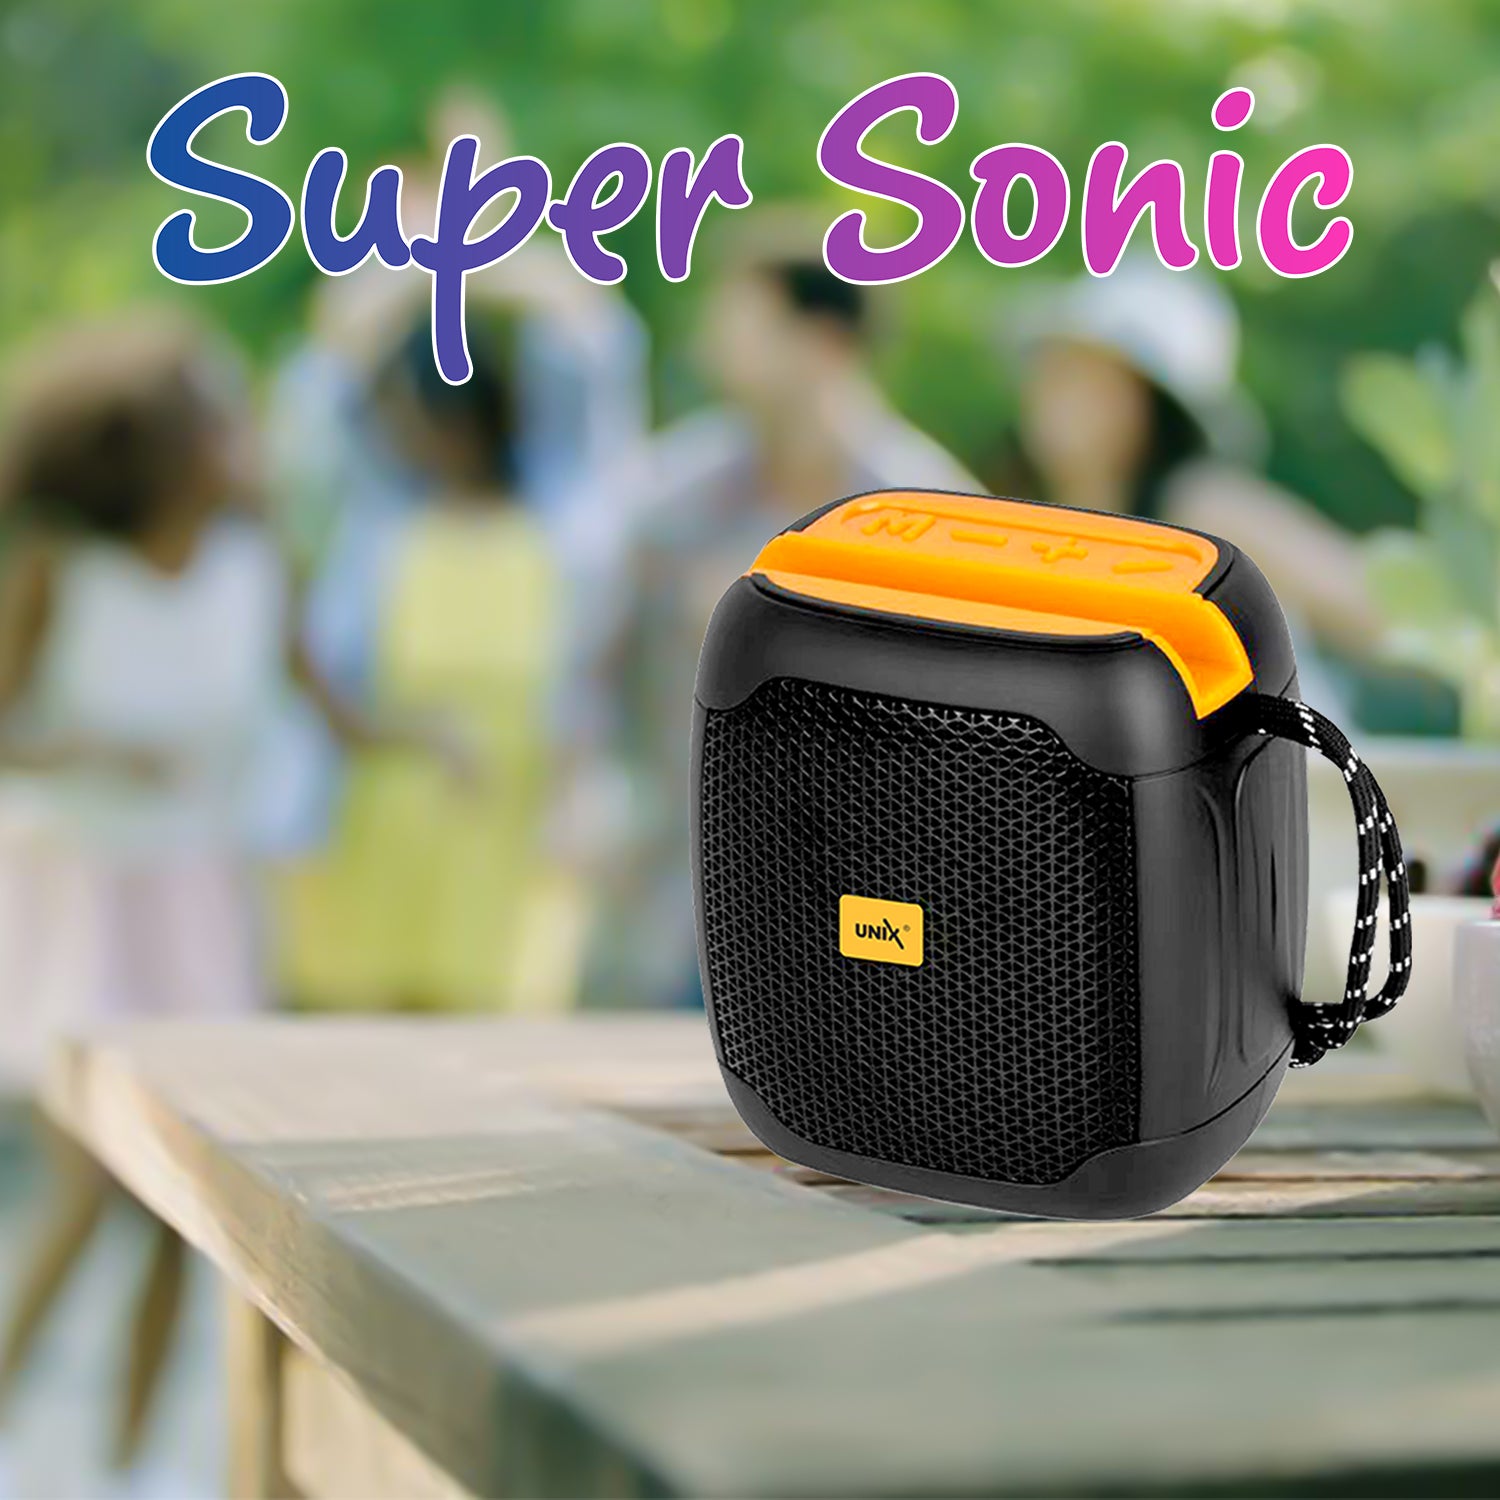 Unix UX-888 Super Sonic Wireless Speaker - Super Bass Black back